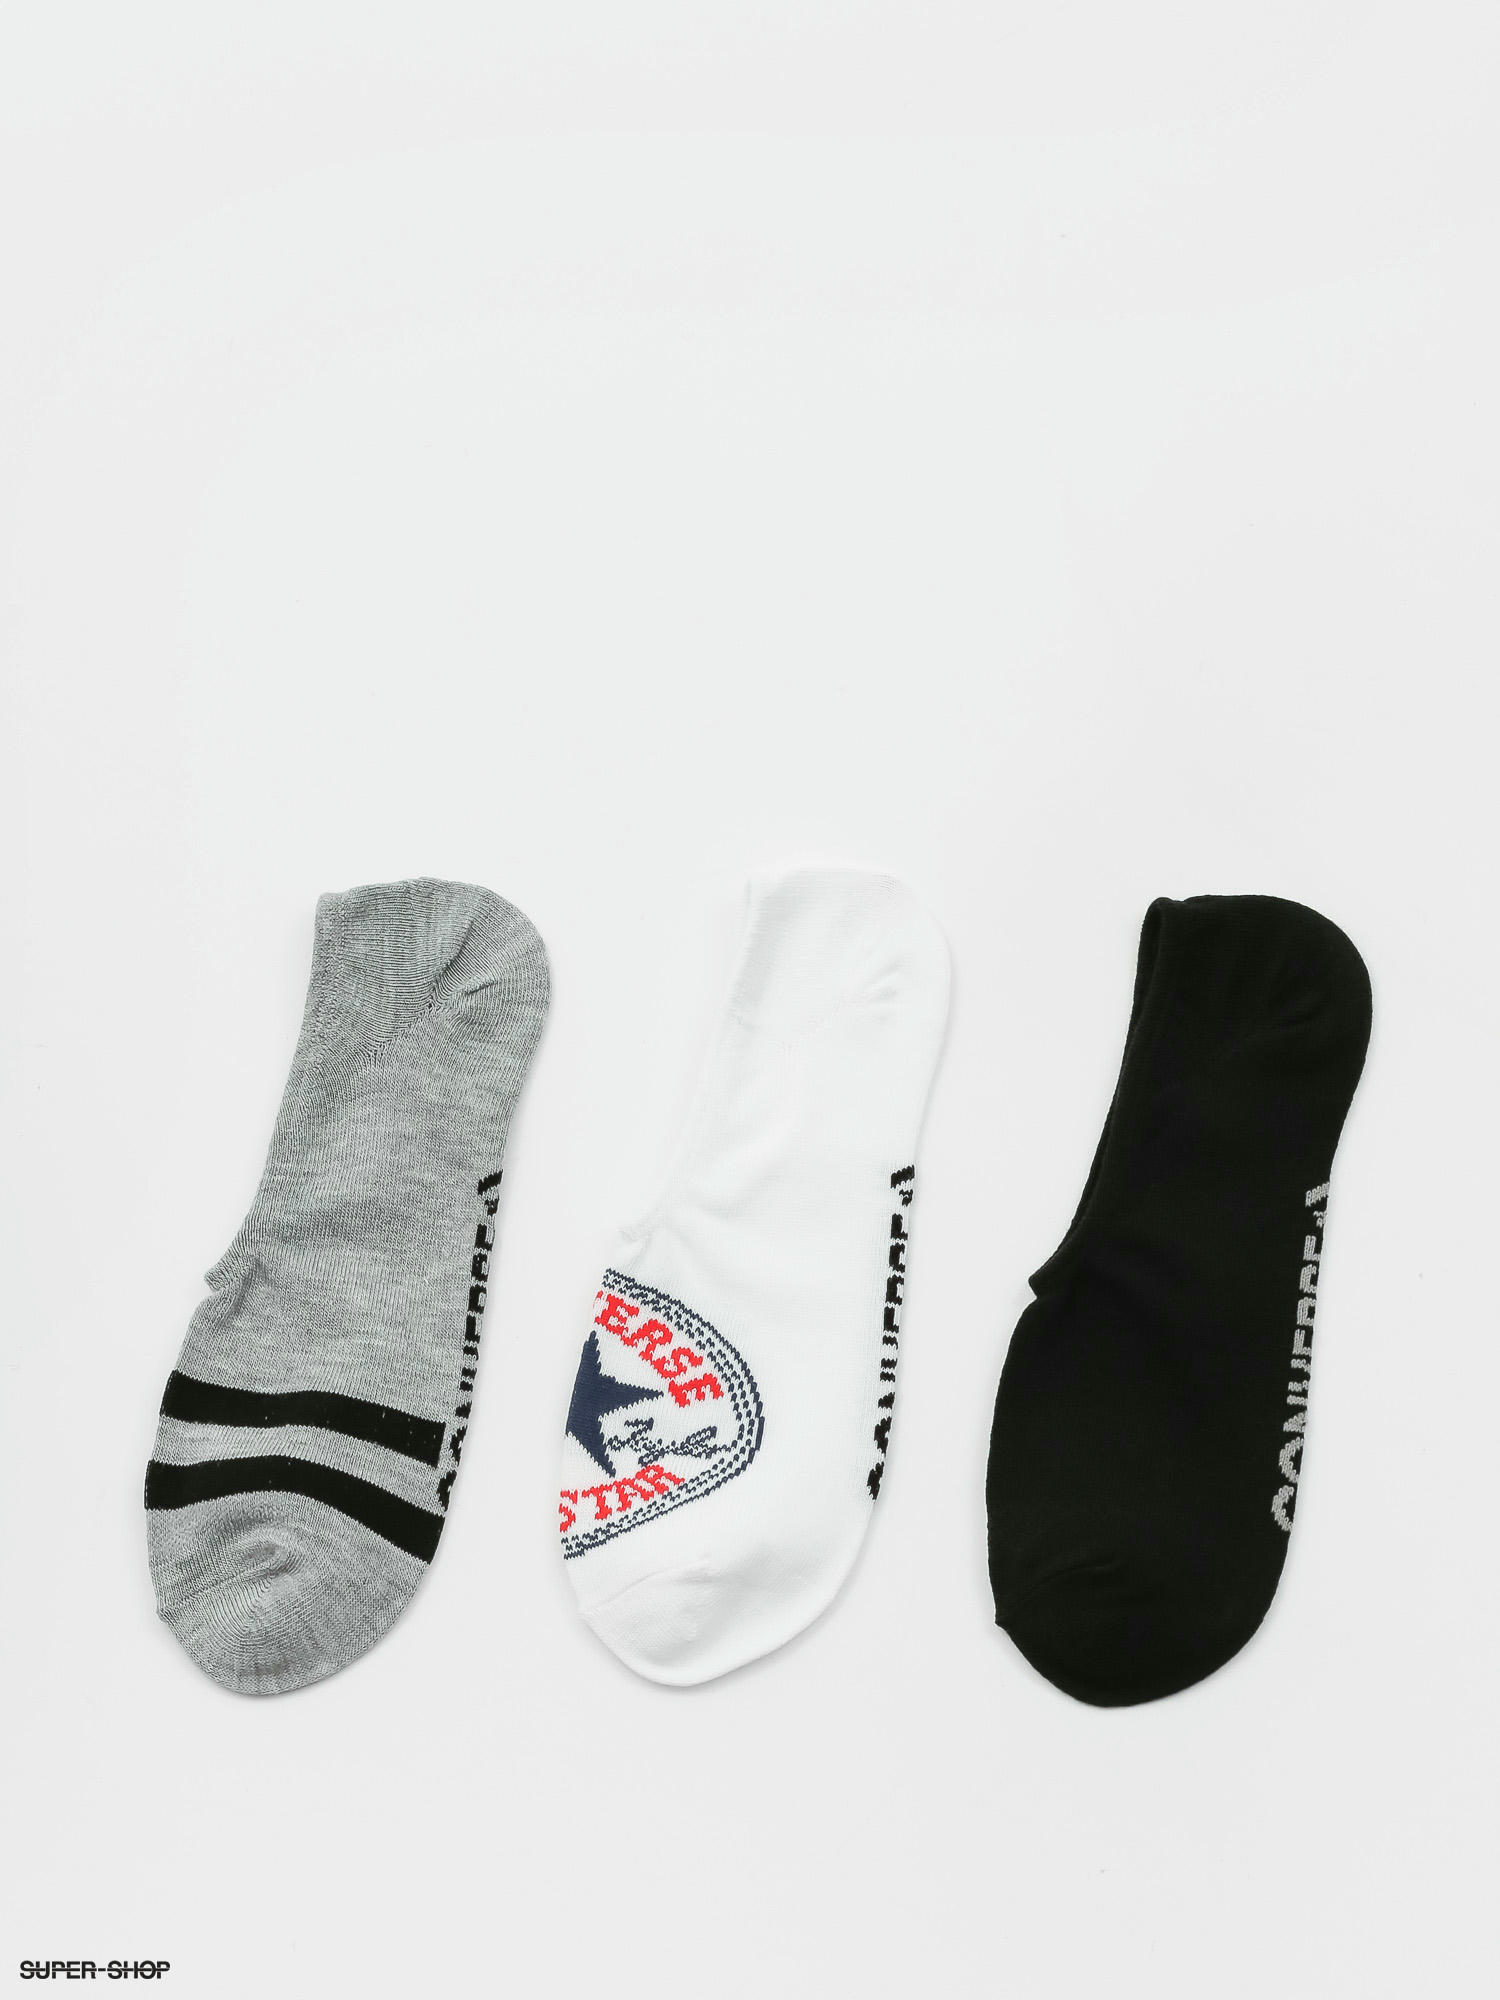 converse socks white